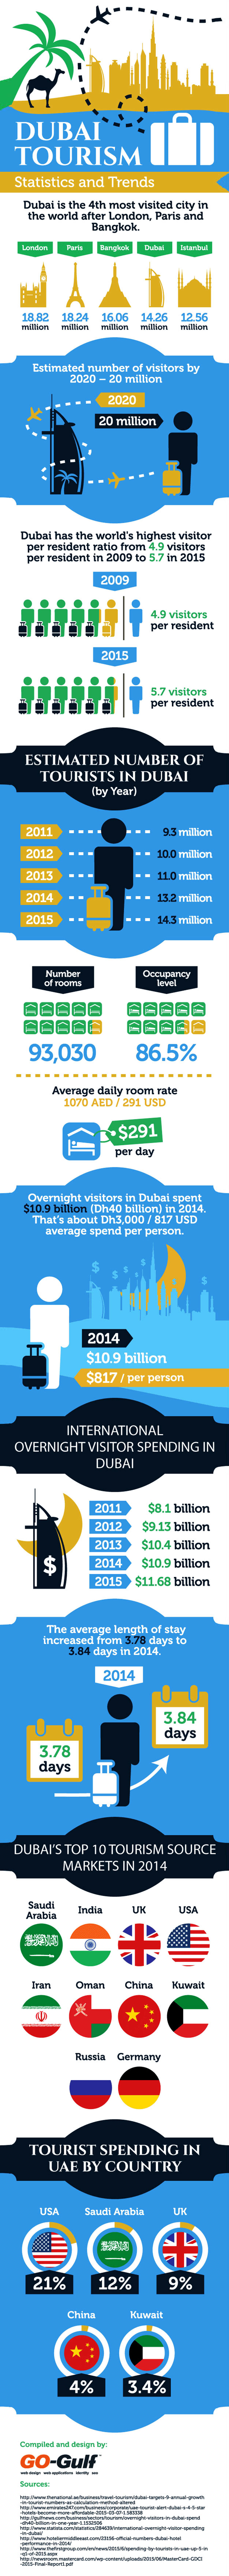 Dubai Tourism Statistics and Trends Infographic